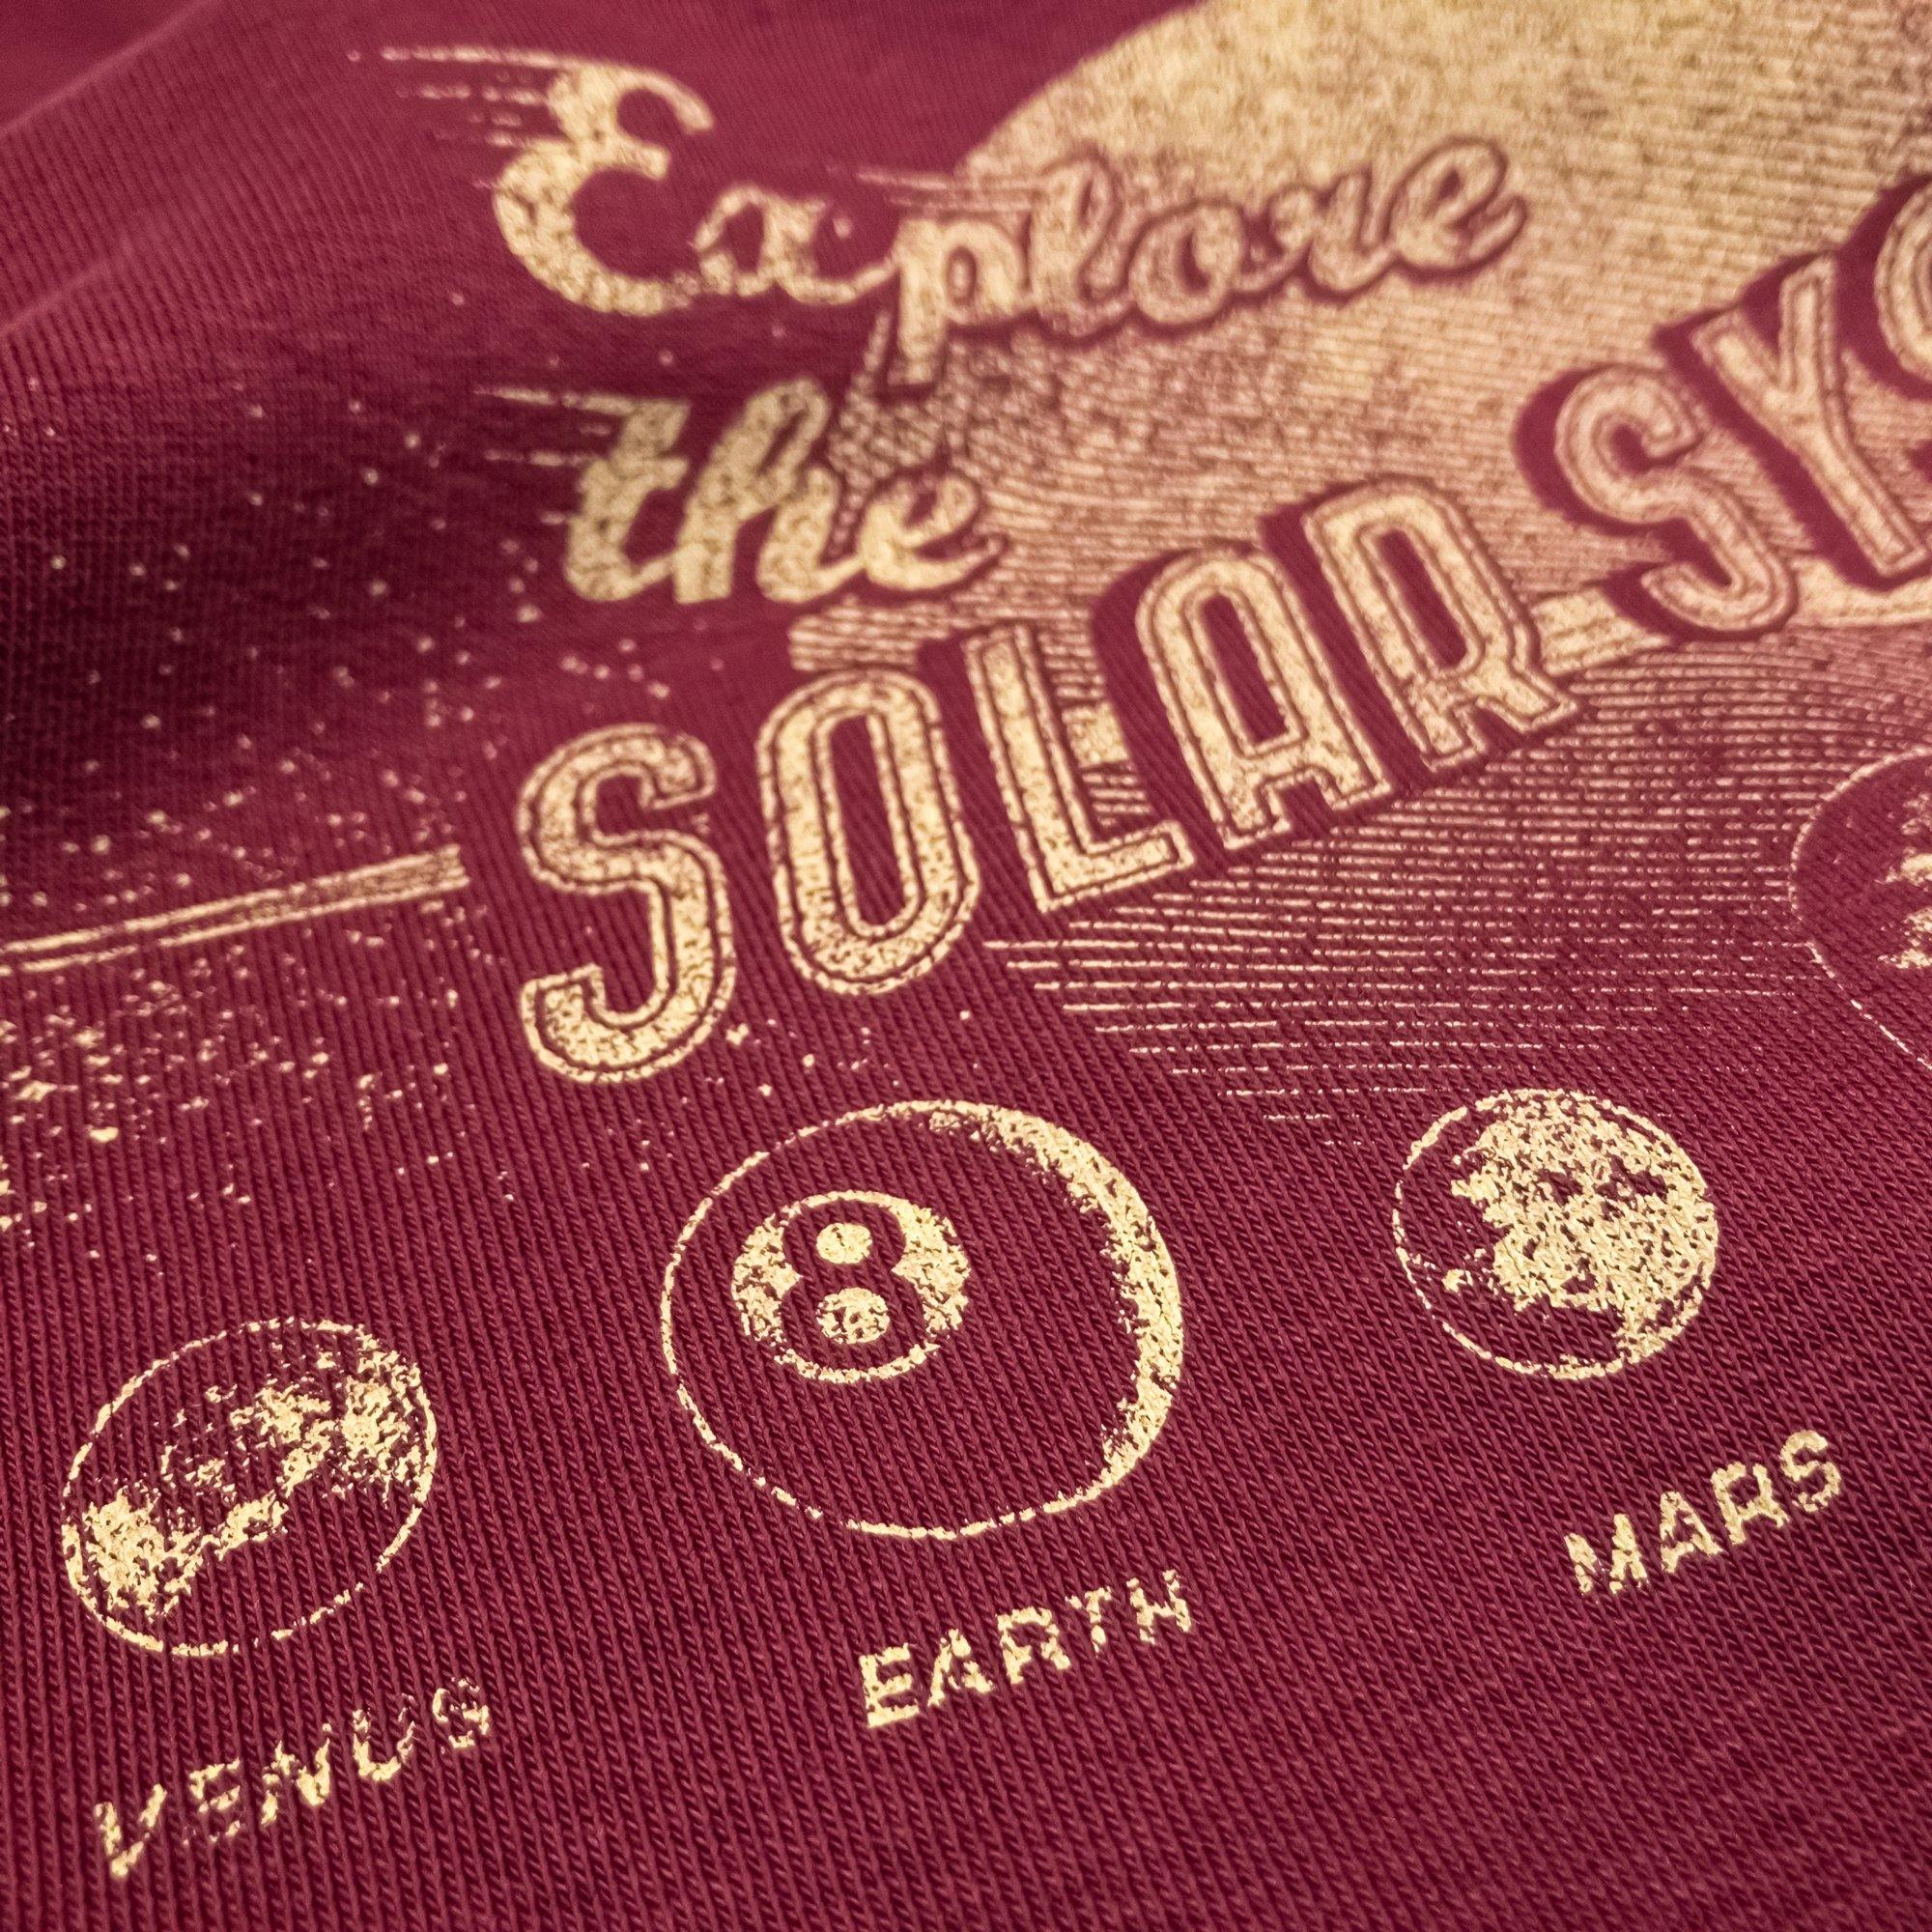 Explore the Solar System sweatshirt hand printed organic cotton sweatshirt